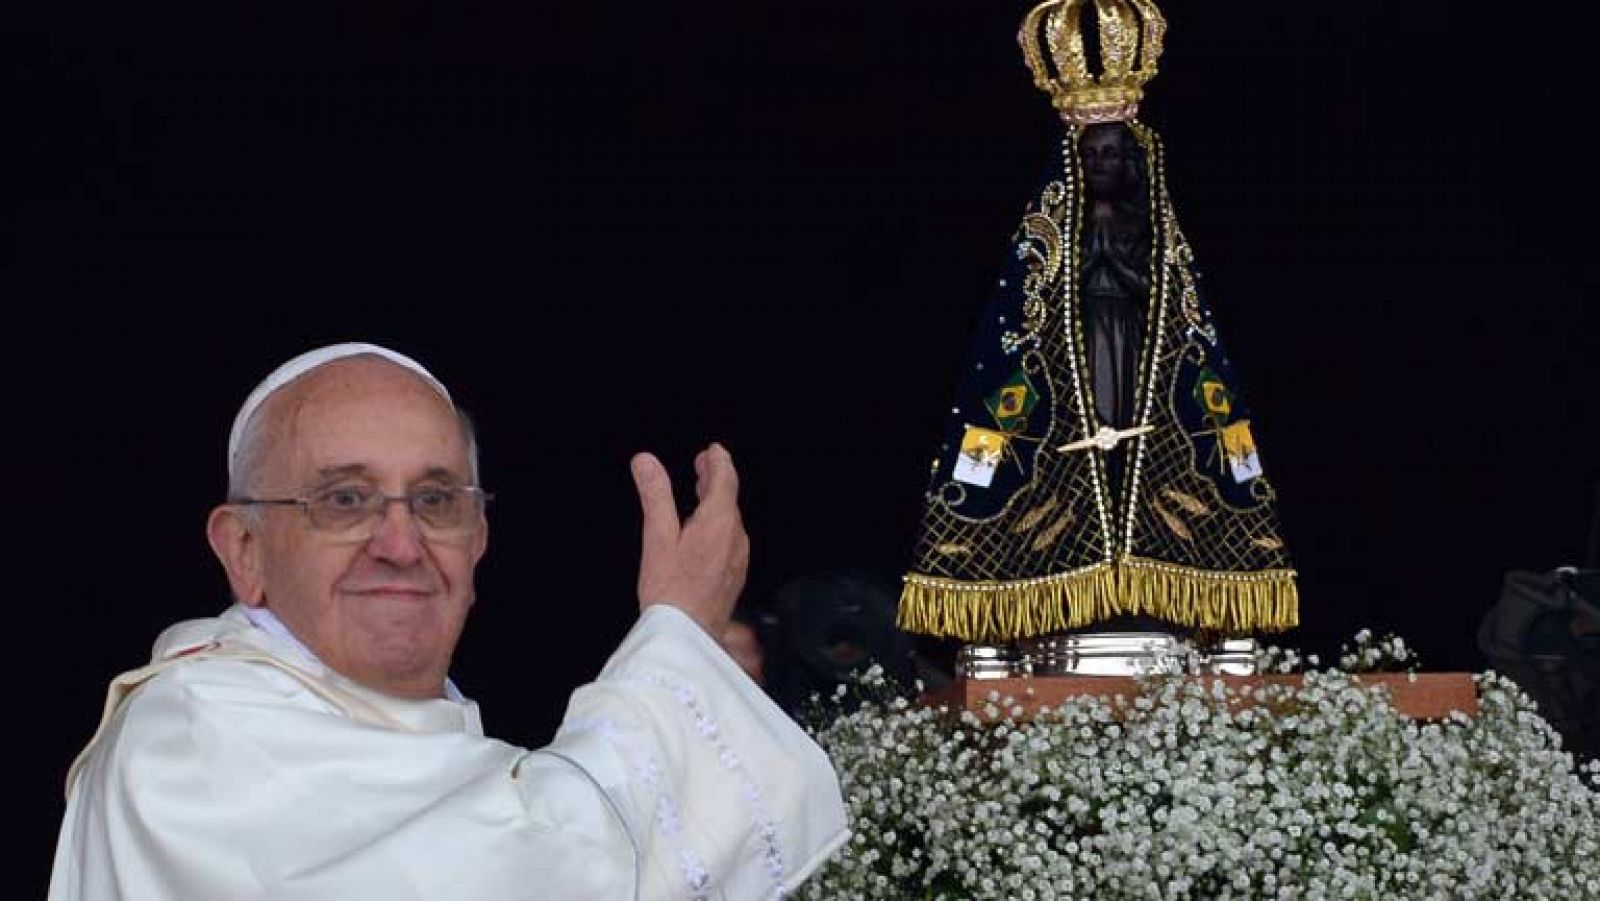 Telediario 1: El papa en la Aparecida, Brasil | RTVE Play